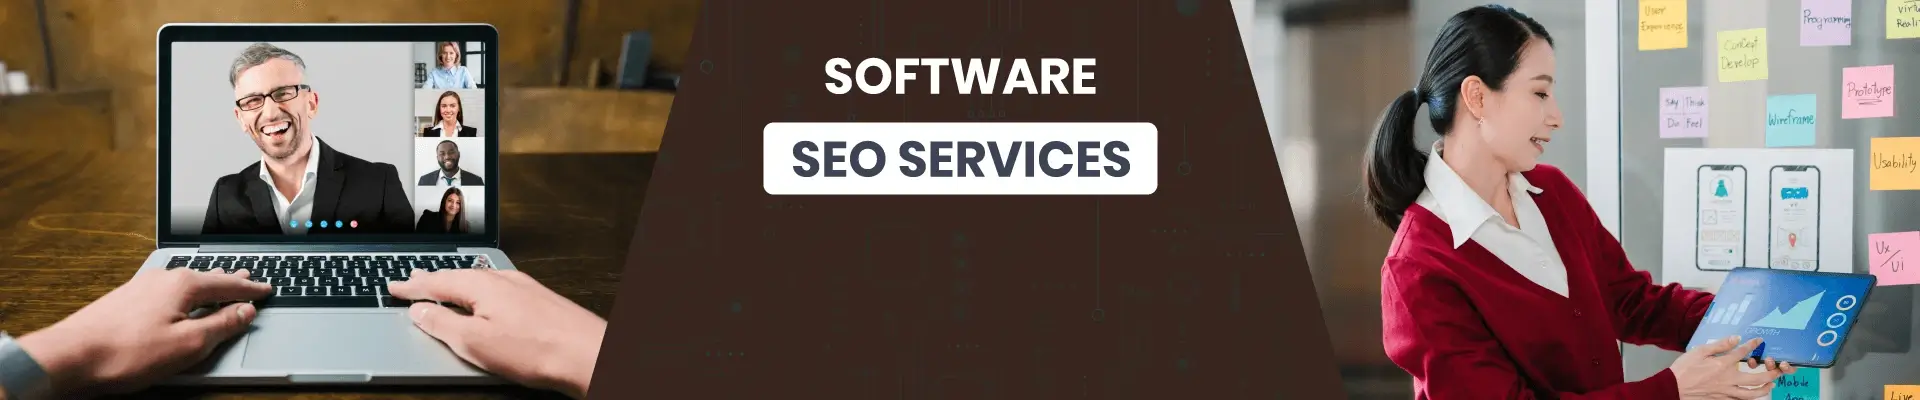 Rank Software Business Website On Google [Software SEO]